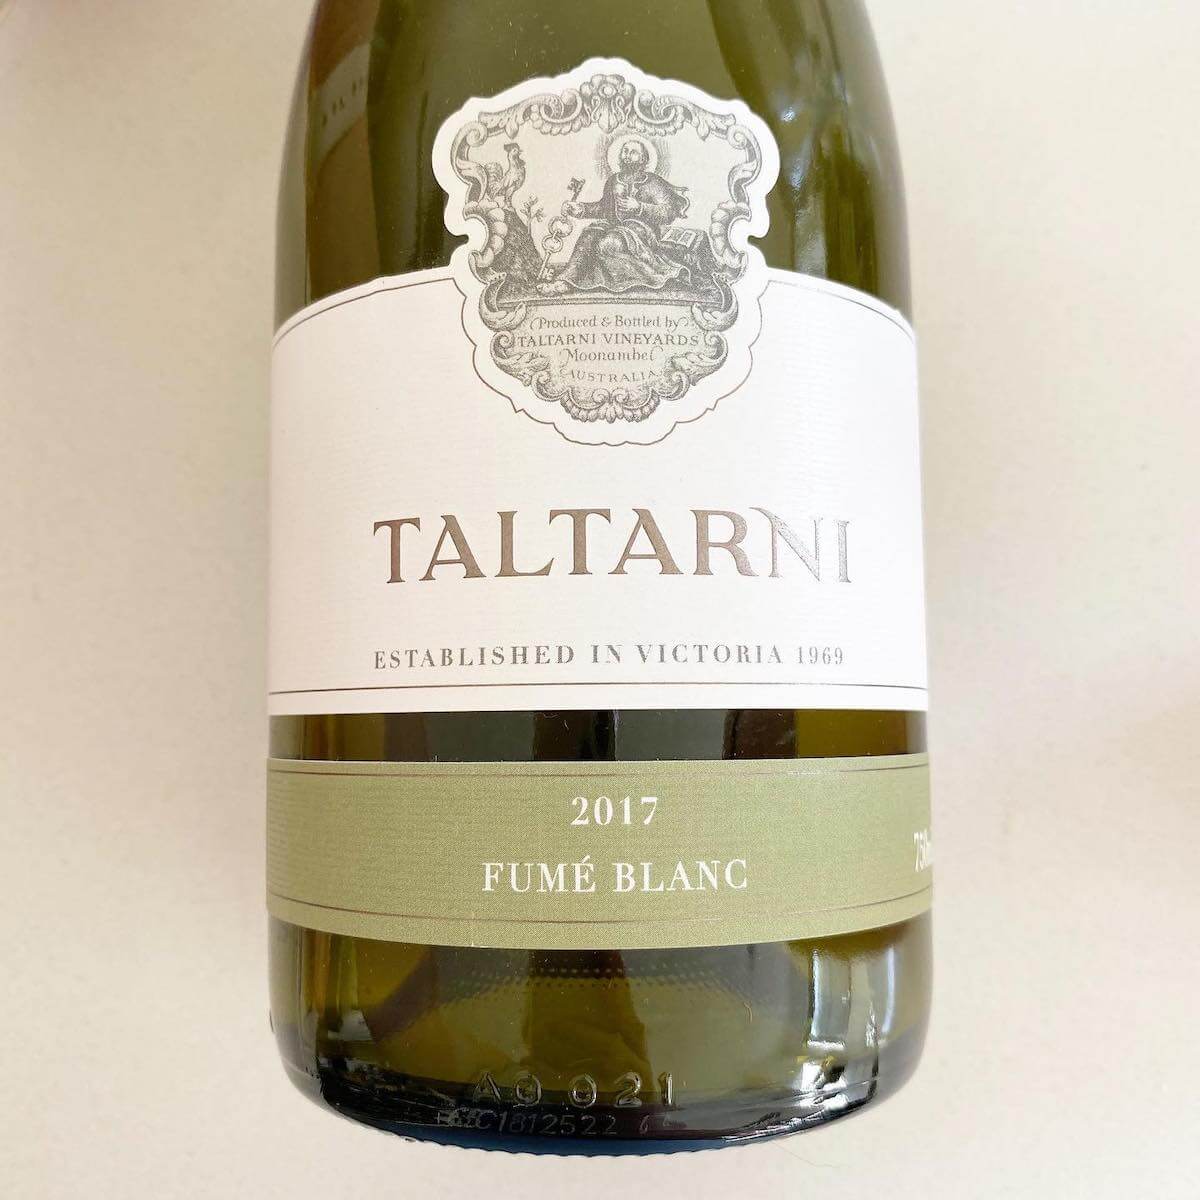 Taltarni 2017 Fumé Blanc (Sauvignon Blanc)